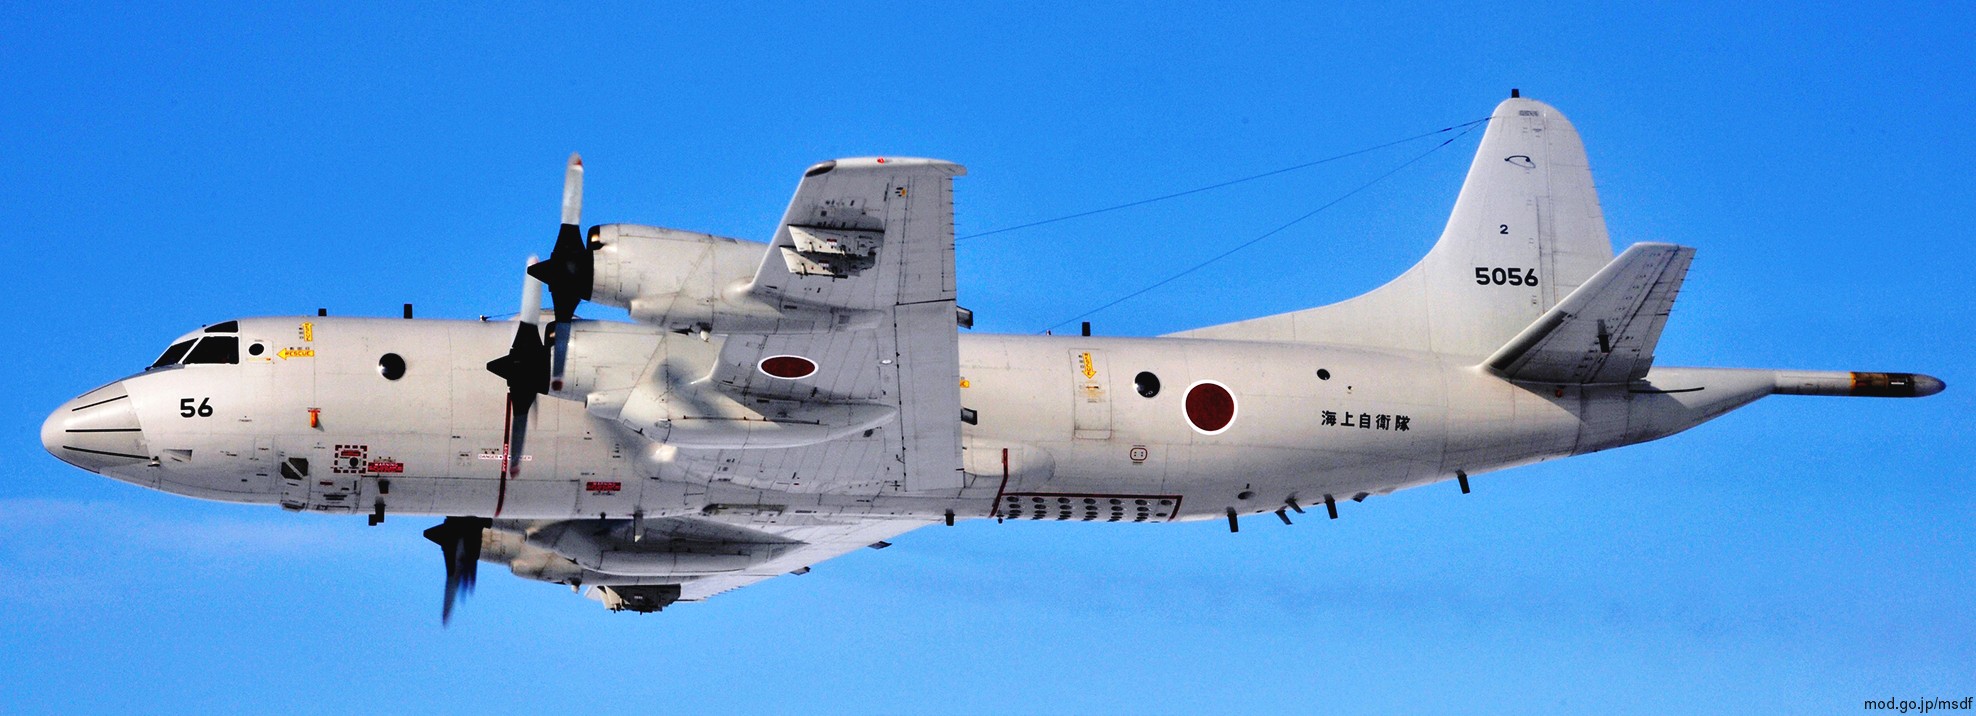 kawasaki p-3c orion patrol aircraft mpa japan maritime self defense force jmsdf 5056 02